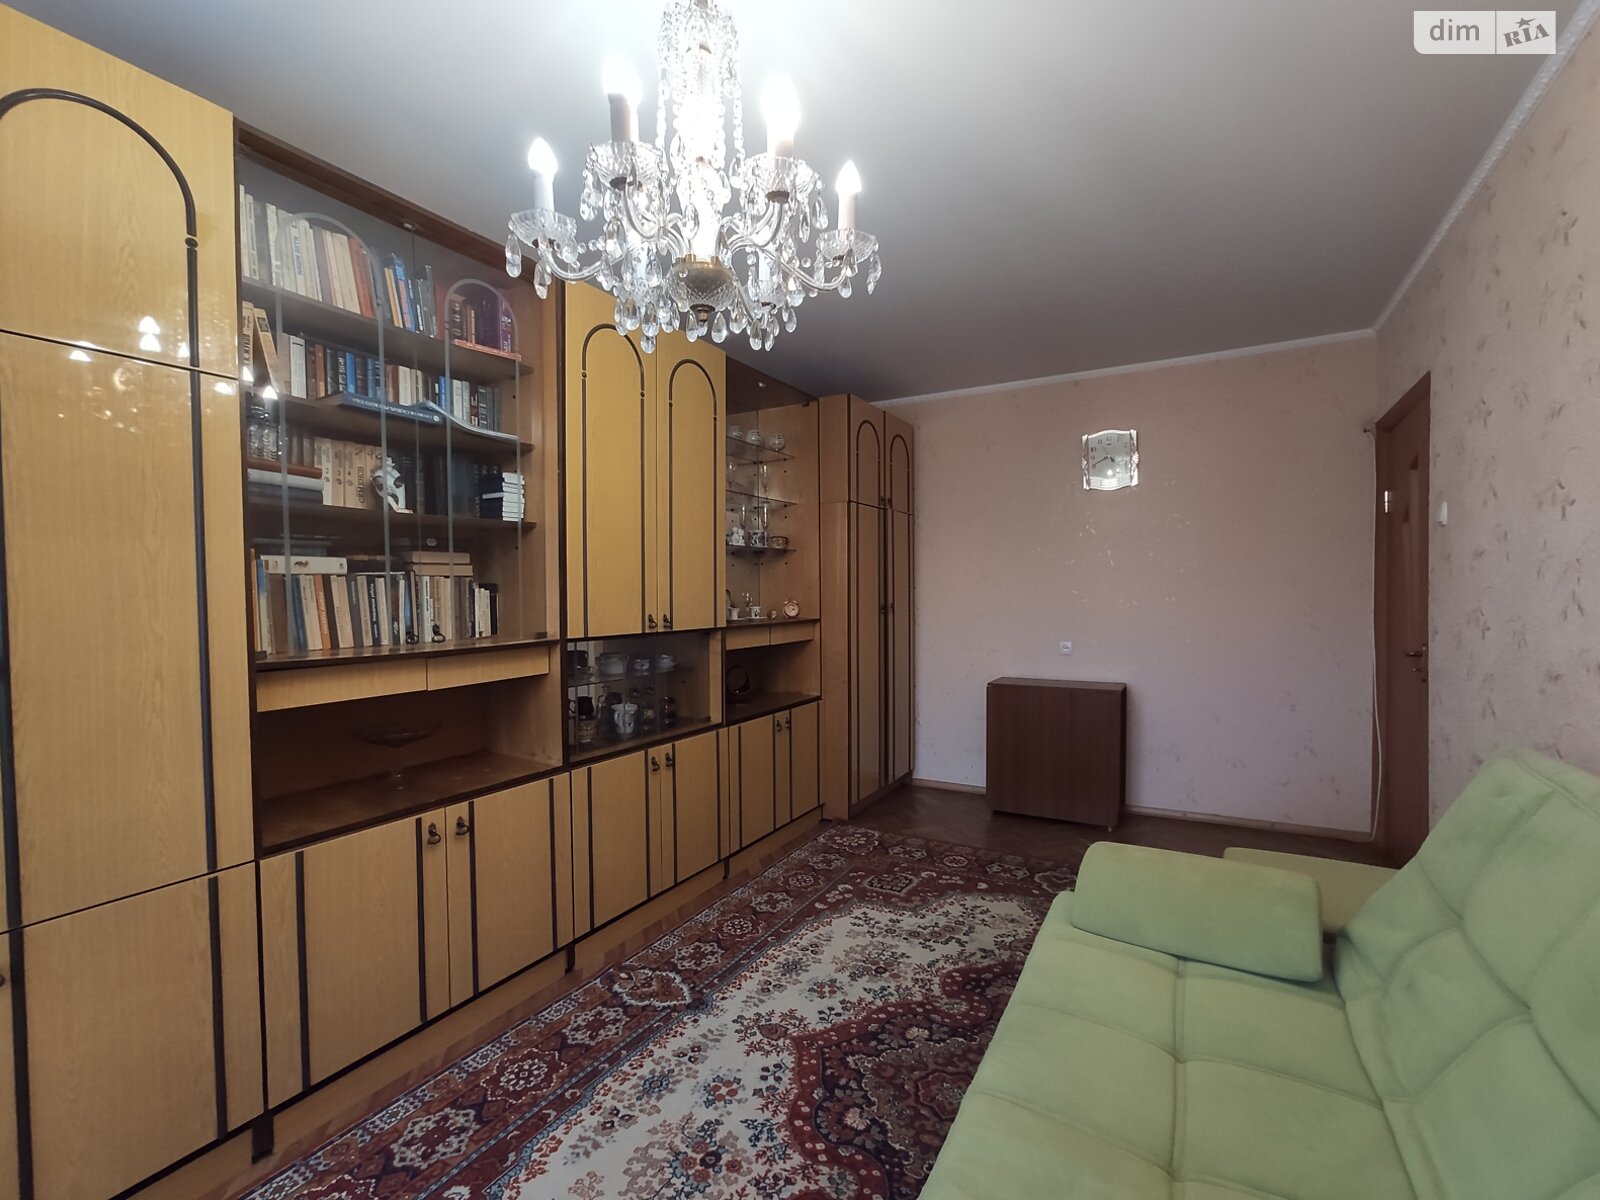 Продажа трехкомнатной квартиры в Виннице, на ул. Ляли Ратушной, район Славянка фото 1